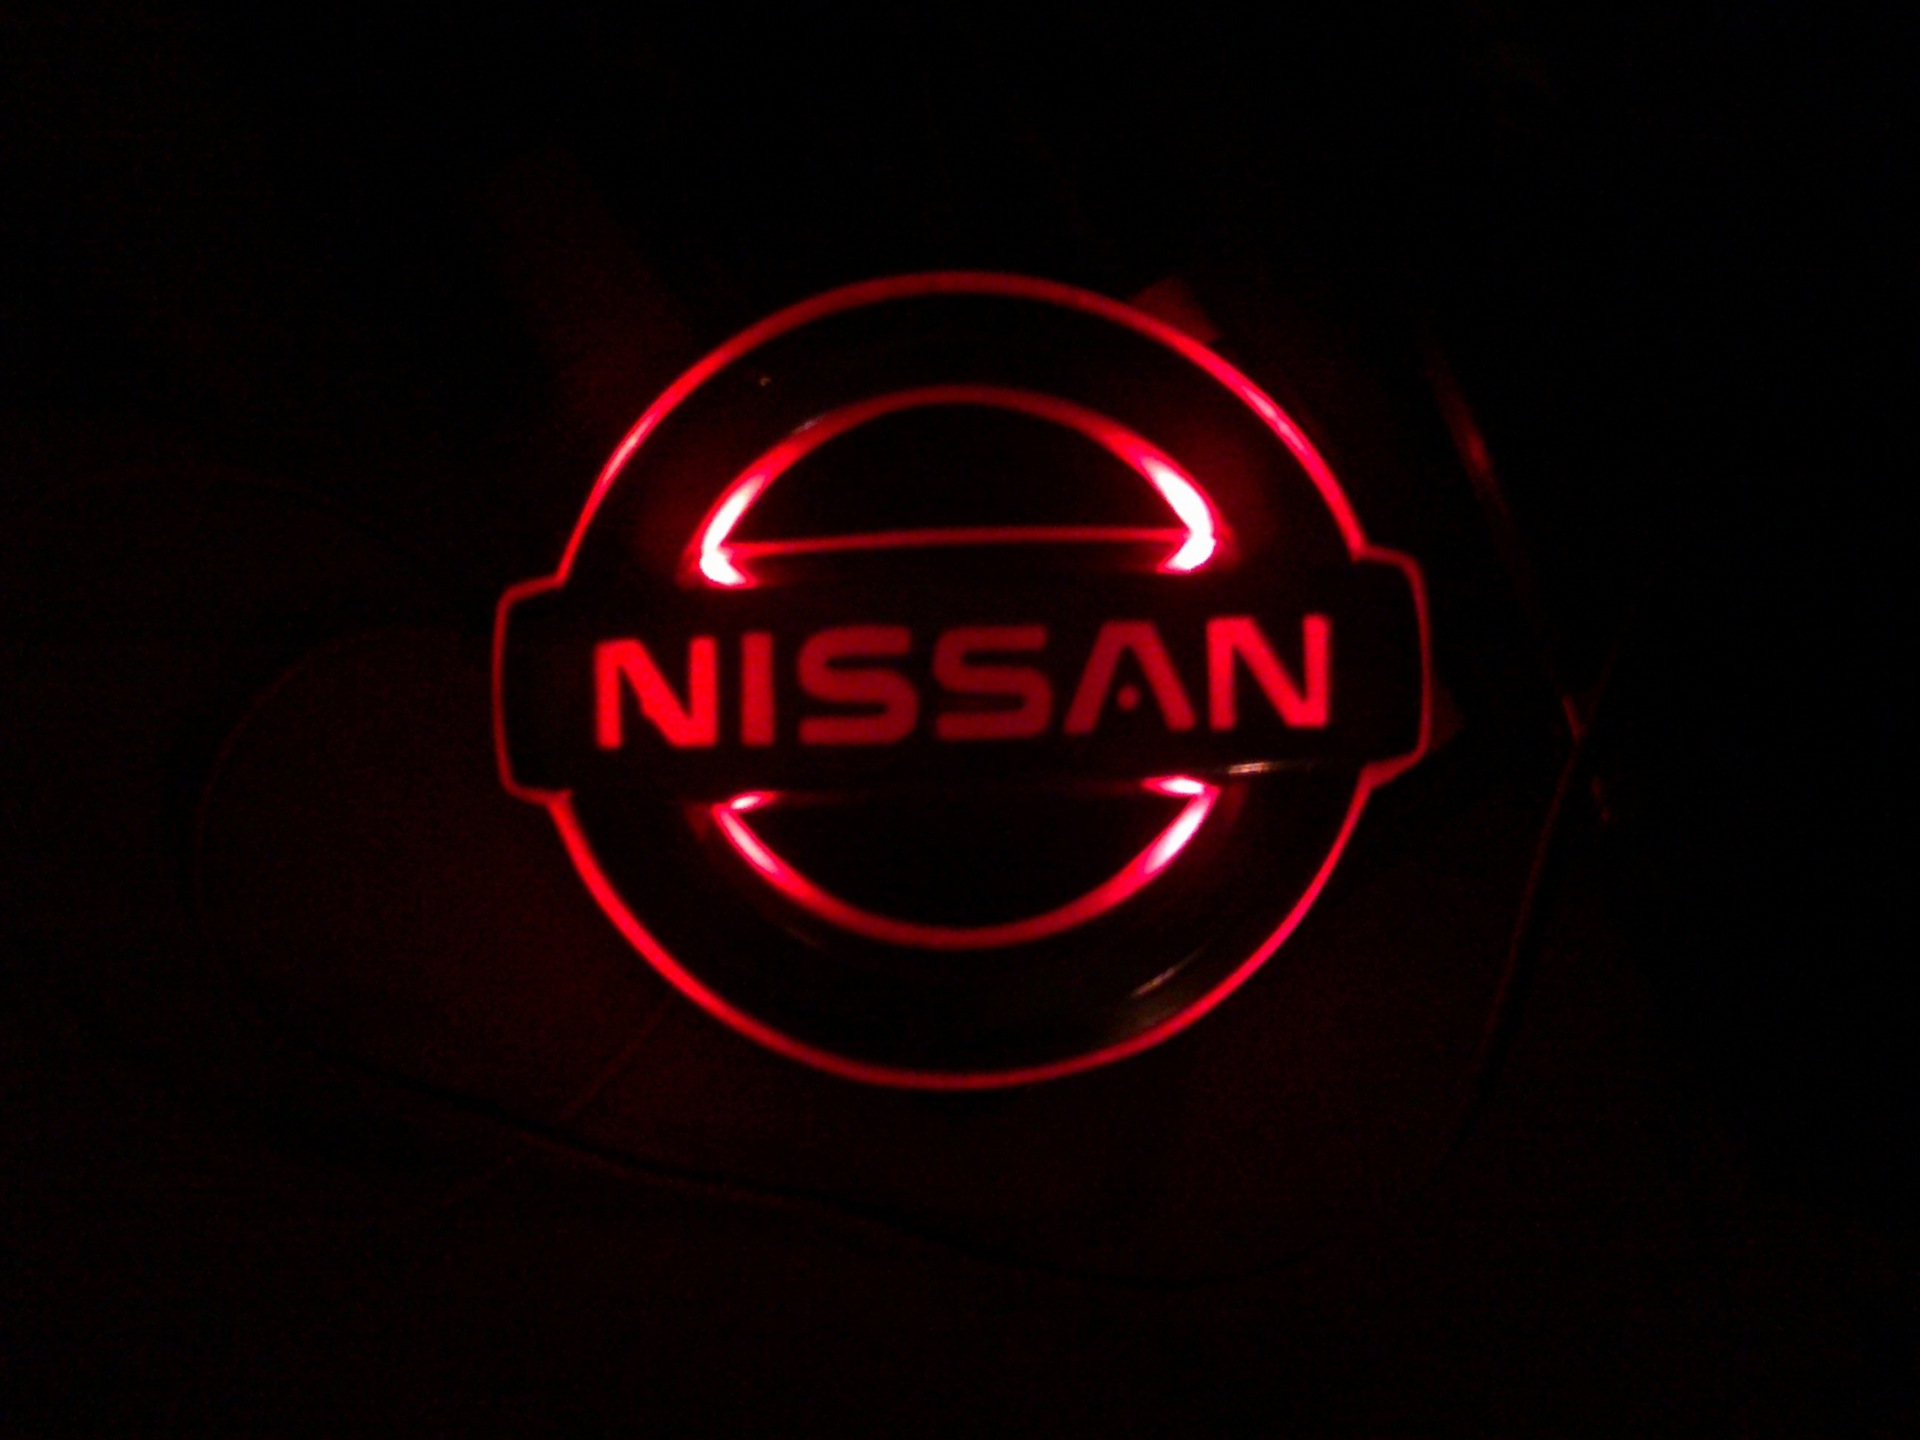 Логотип на заставку магнитолы. Логотип Nissan. Заставка Ниссан. Логотип Ниссан для магнитолы. Обои логотип Ниссан.